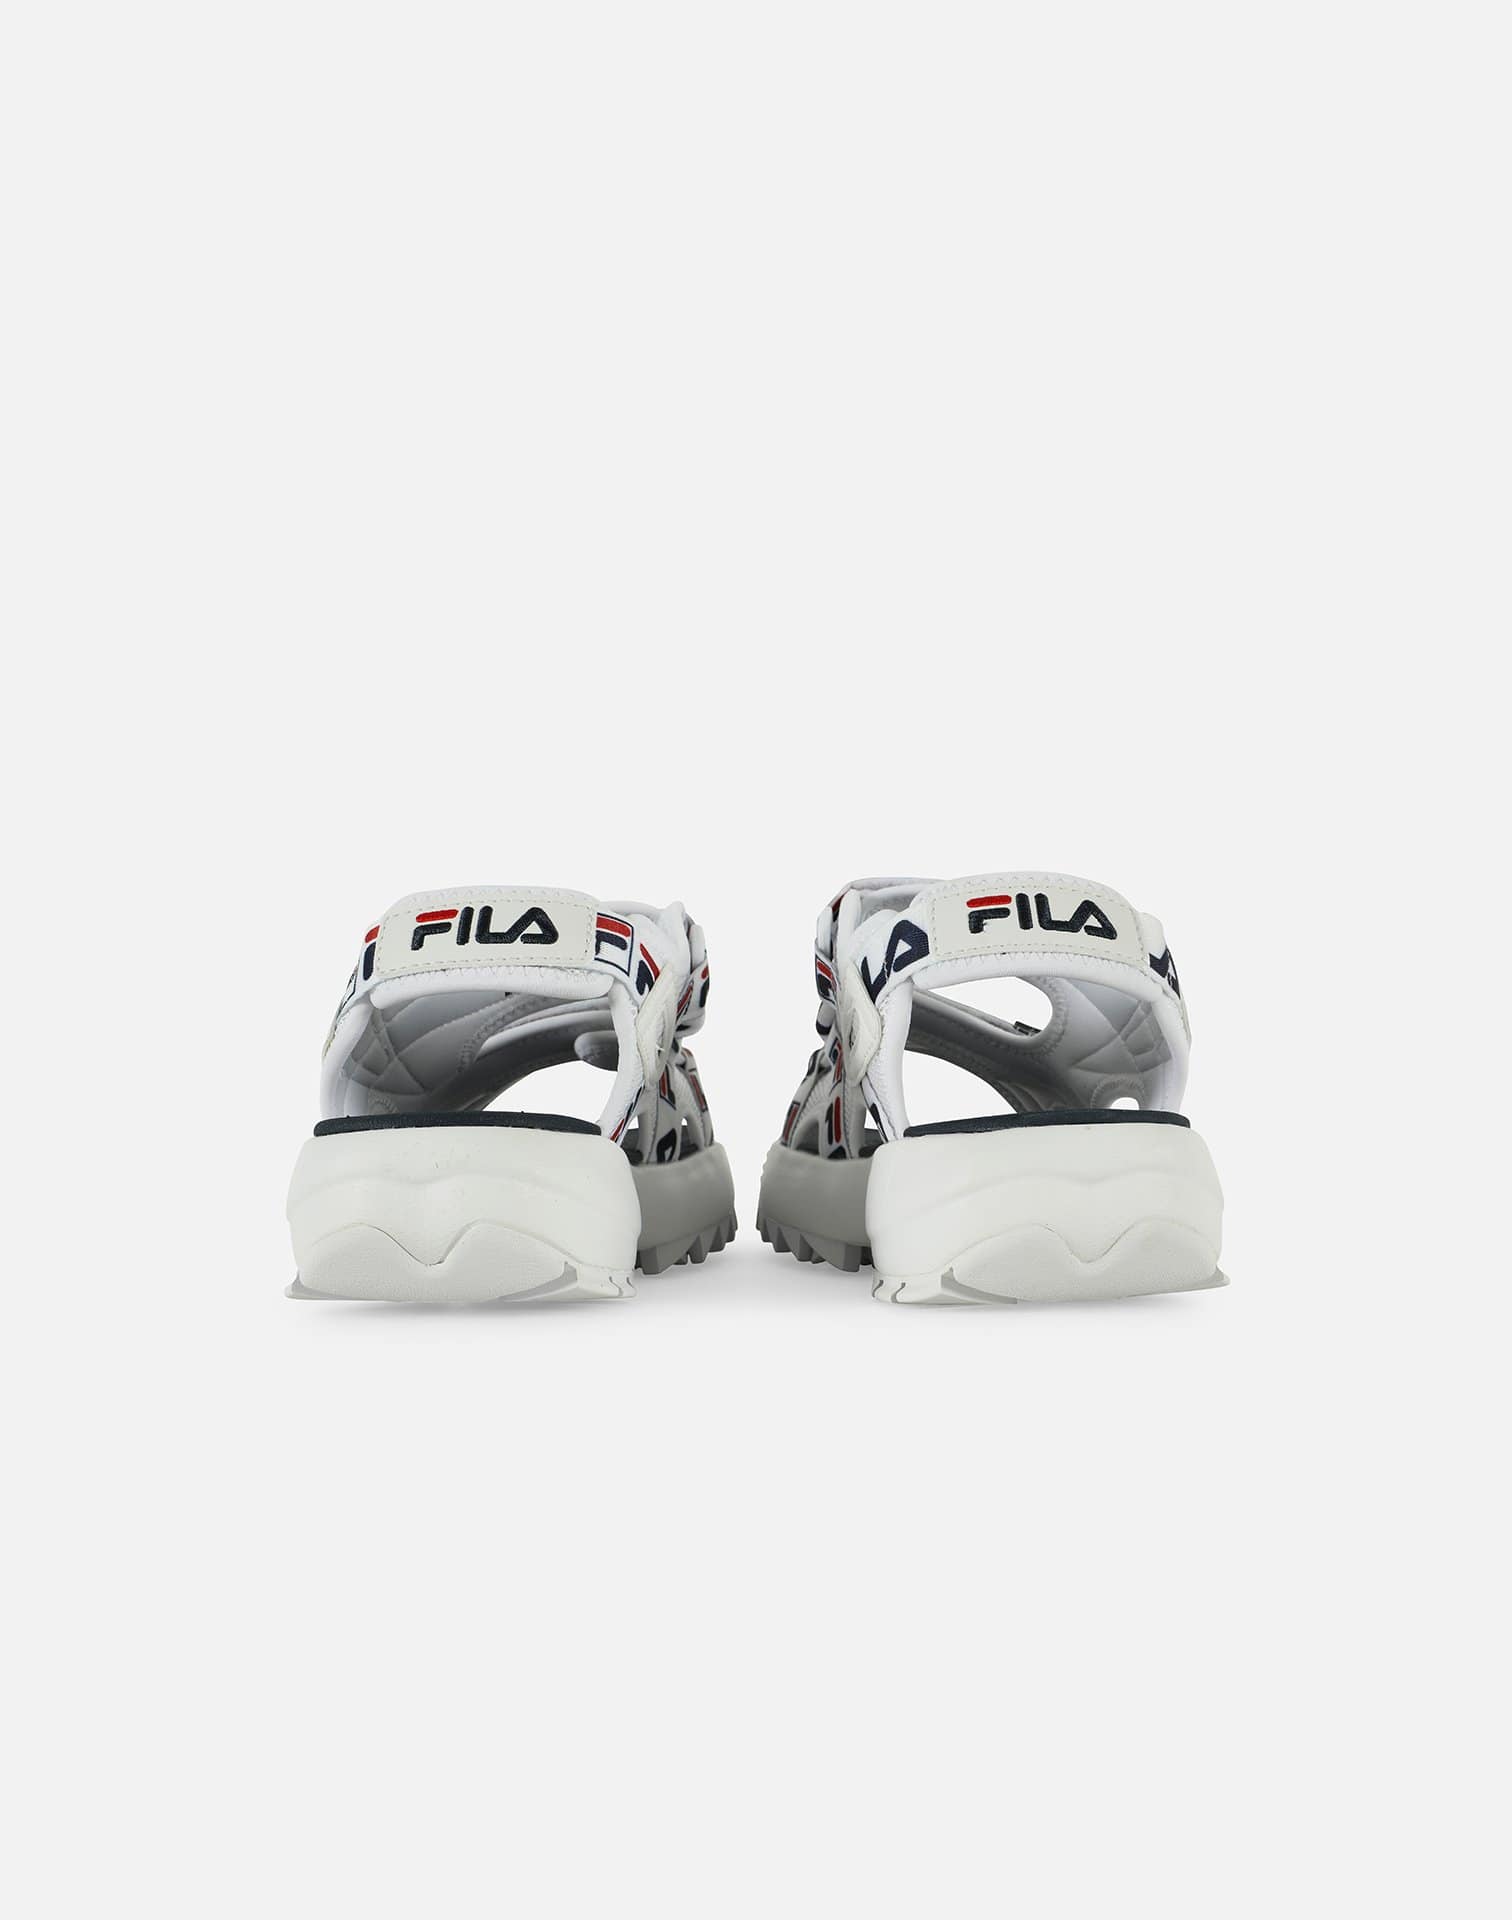 FILA Women's Disruptor Sandals